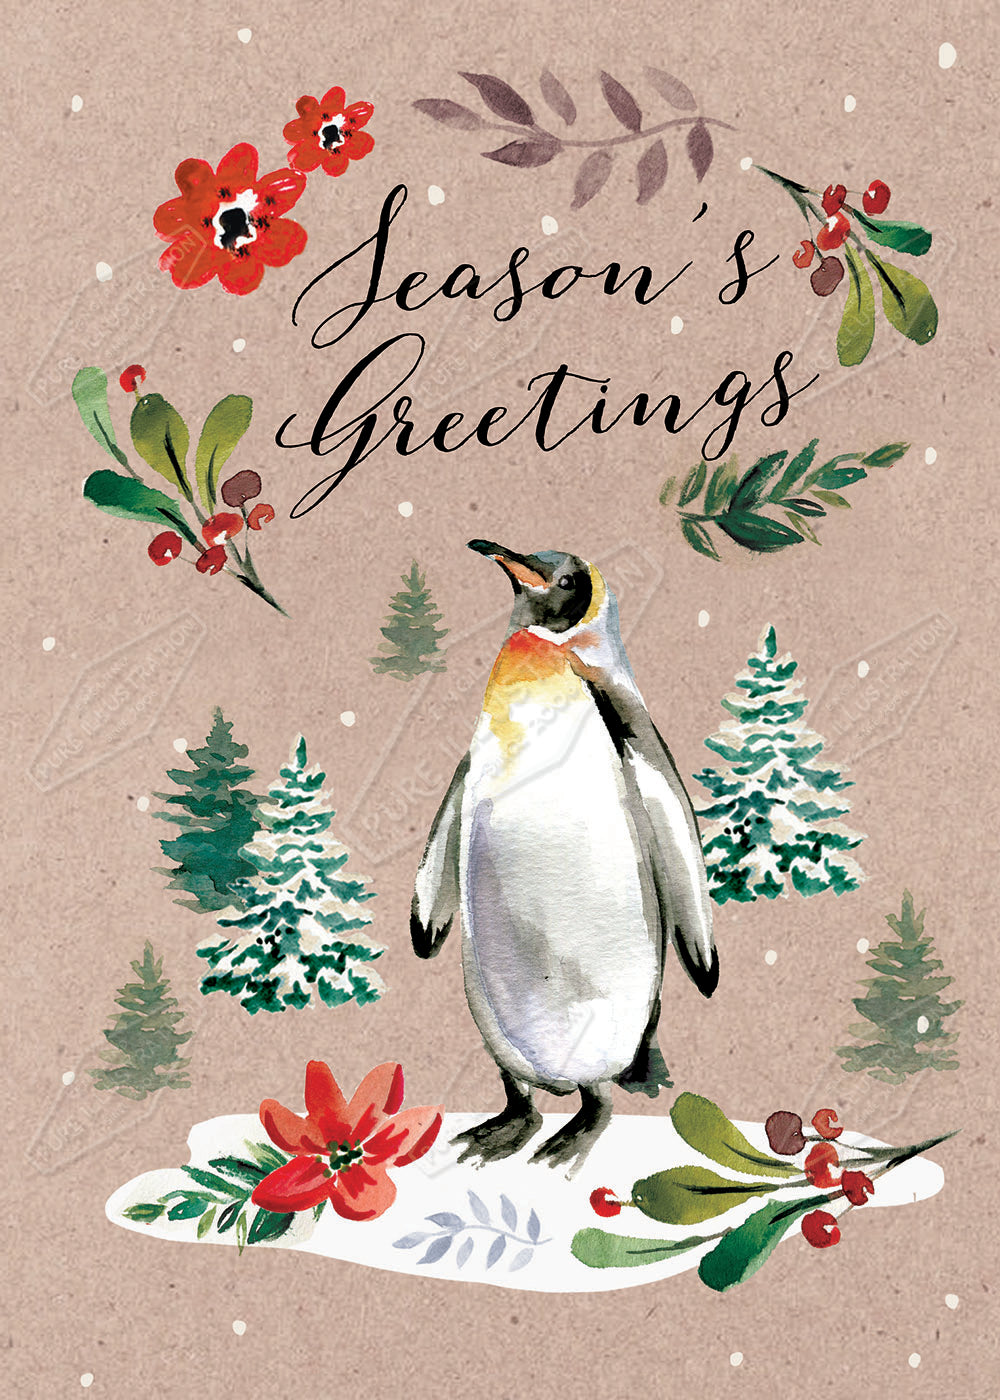 00029443DEV - Deva Evans is represented by Pure Art Licensing Agency - Christmas Greeting Card Design